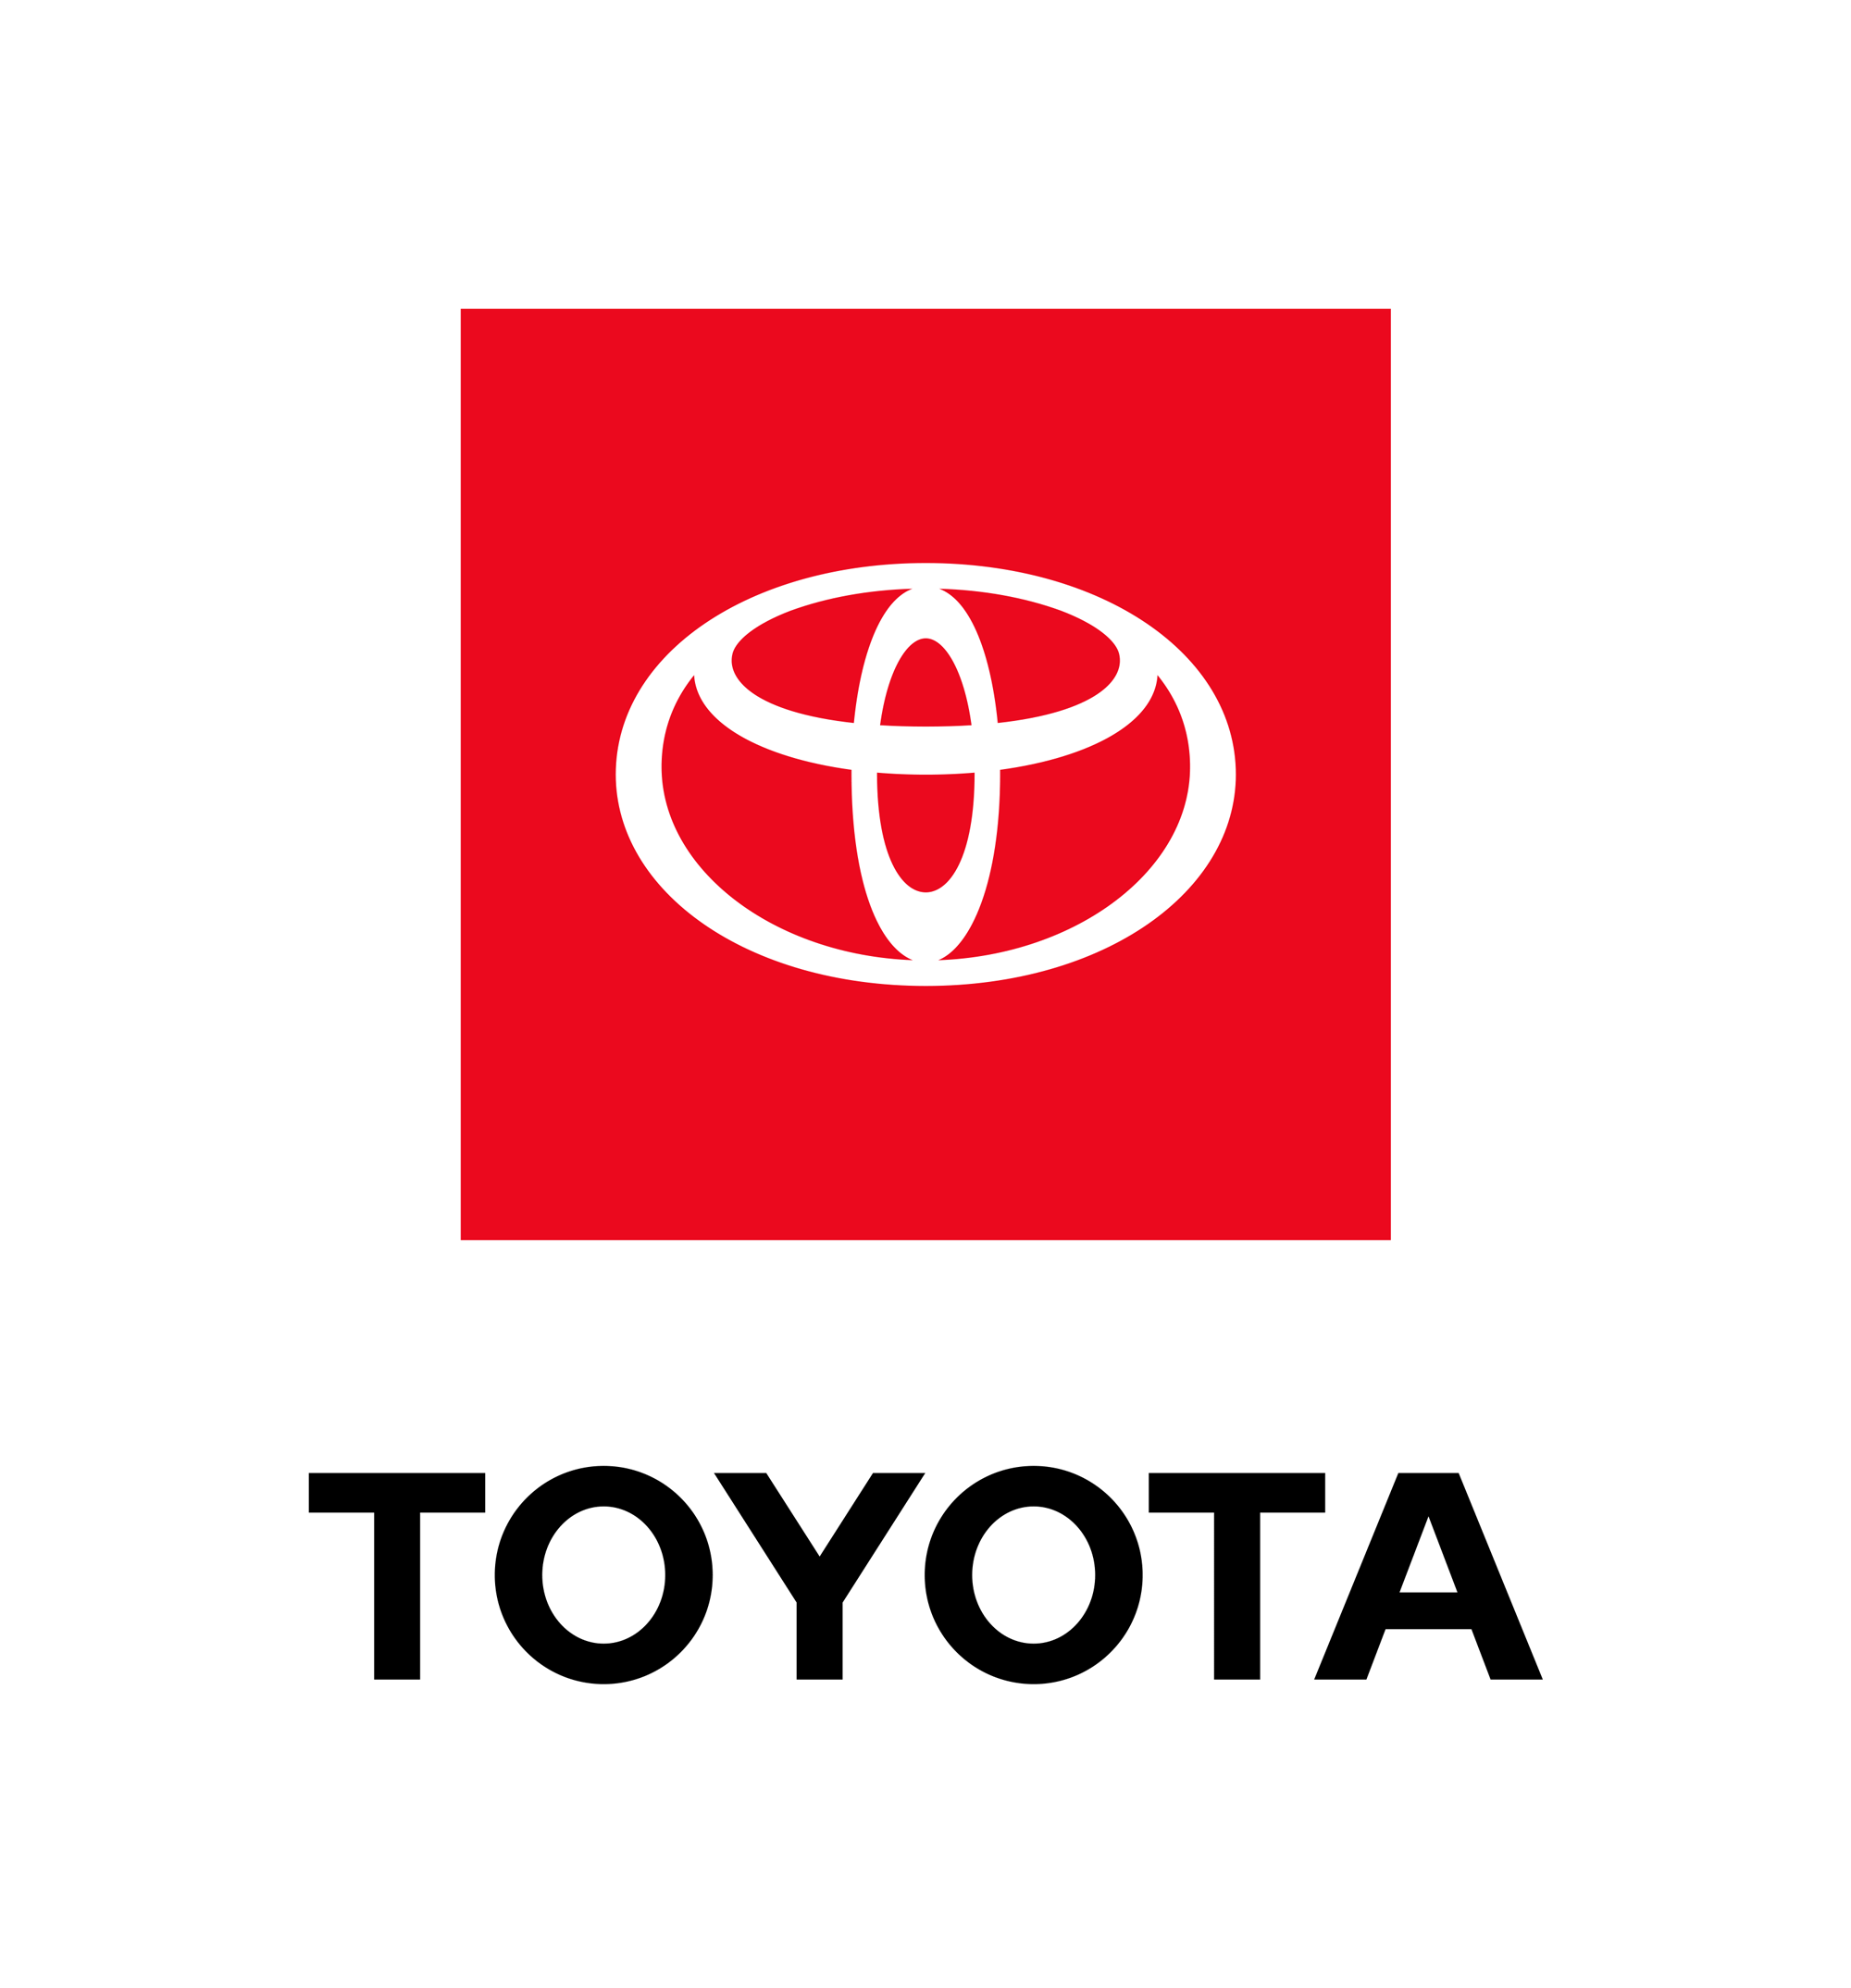 Nowe logo Toyoty 2019 rebranding